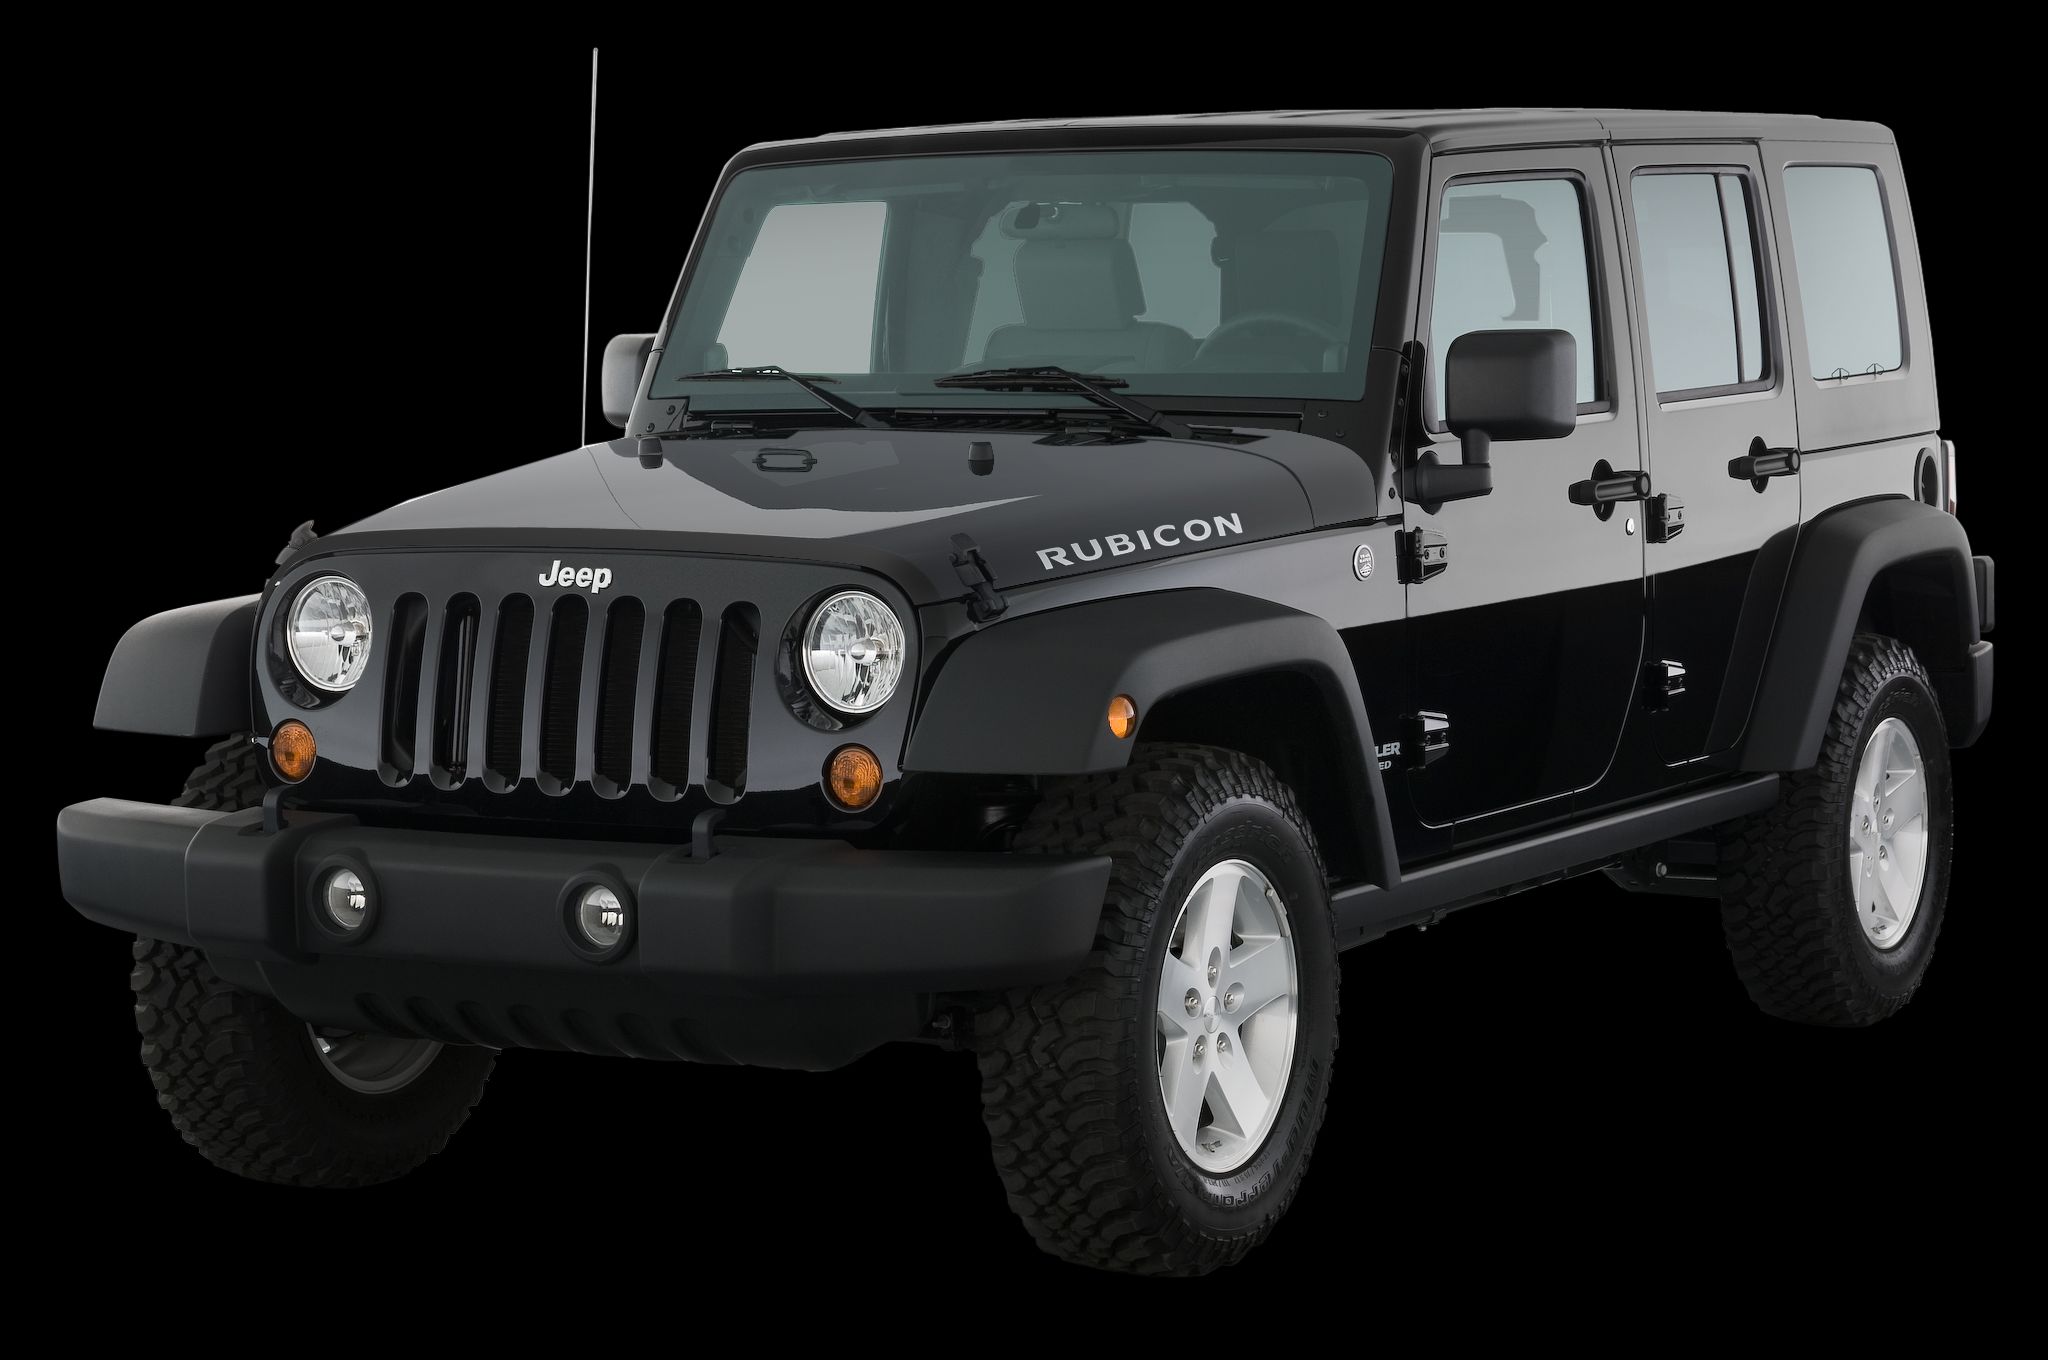 jeep wrangler, jeep, jeep wrangler rubicon, vehicles, black car